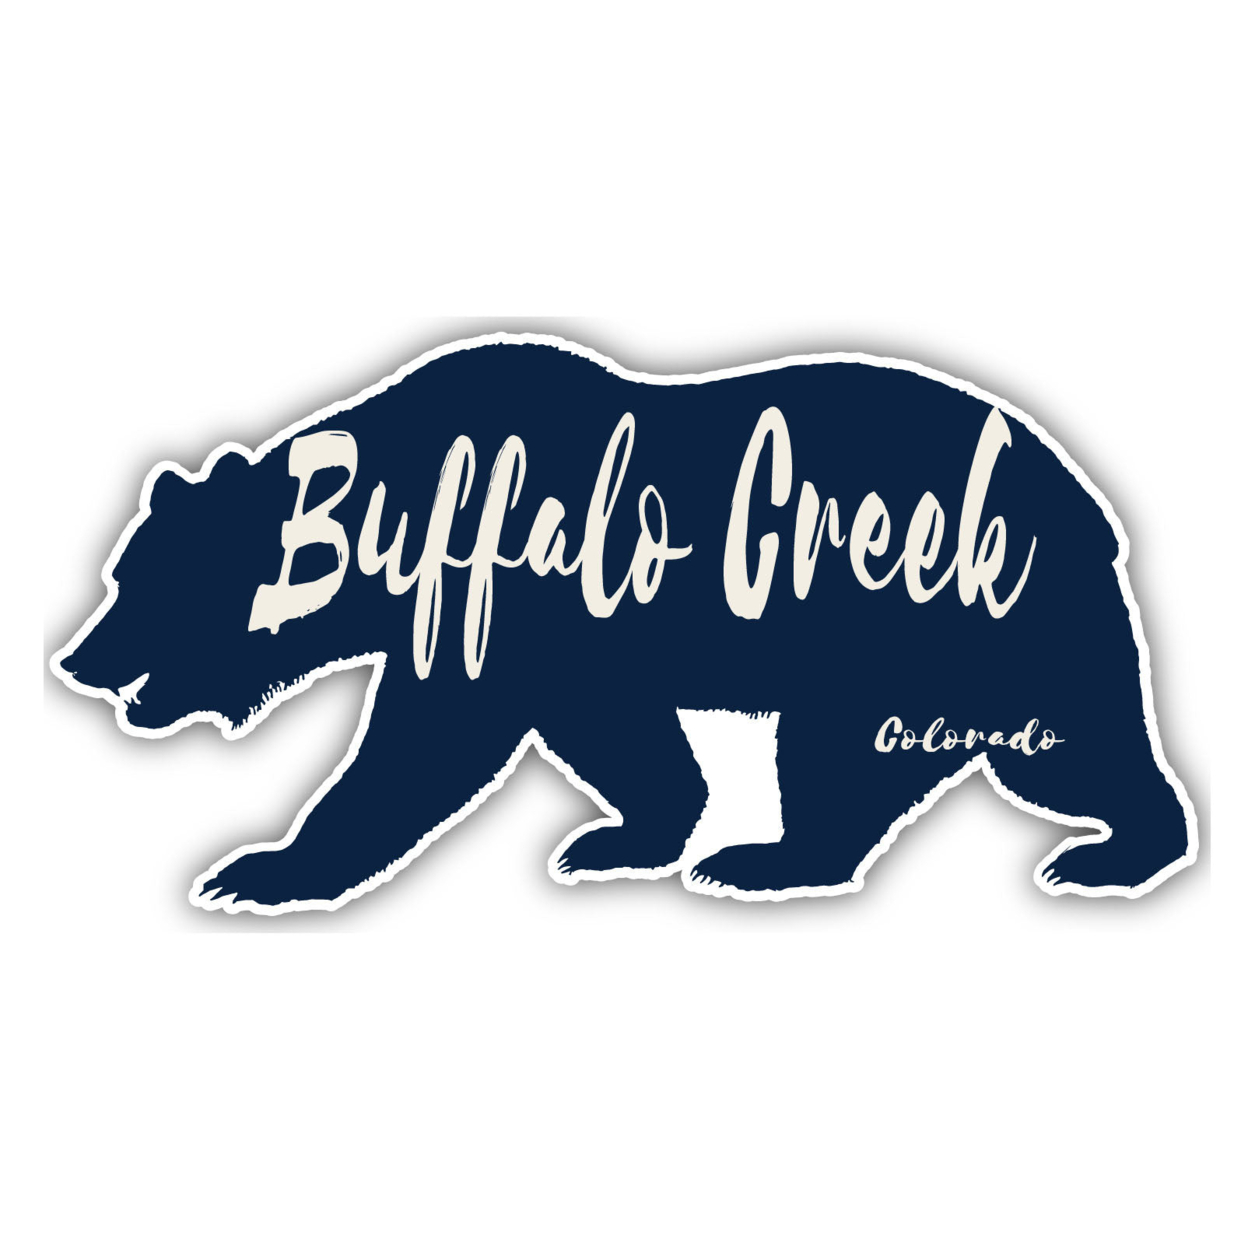 Buffalo Creek Colorado Souvenir Decorative Stickers (Choose Theme And Size) - 4-Pack, 10-Inch, Bear